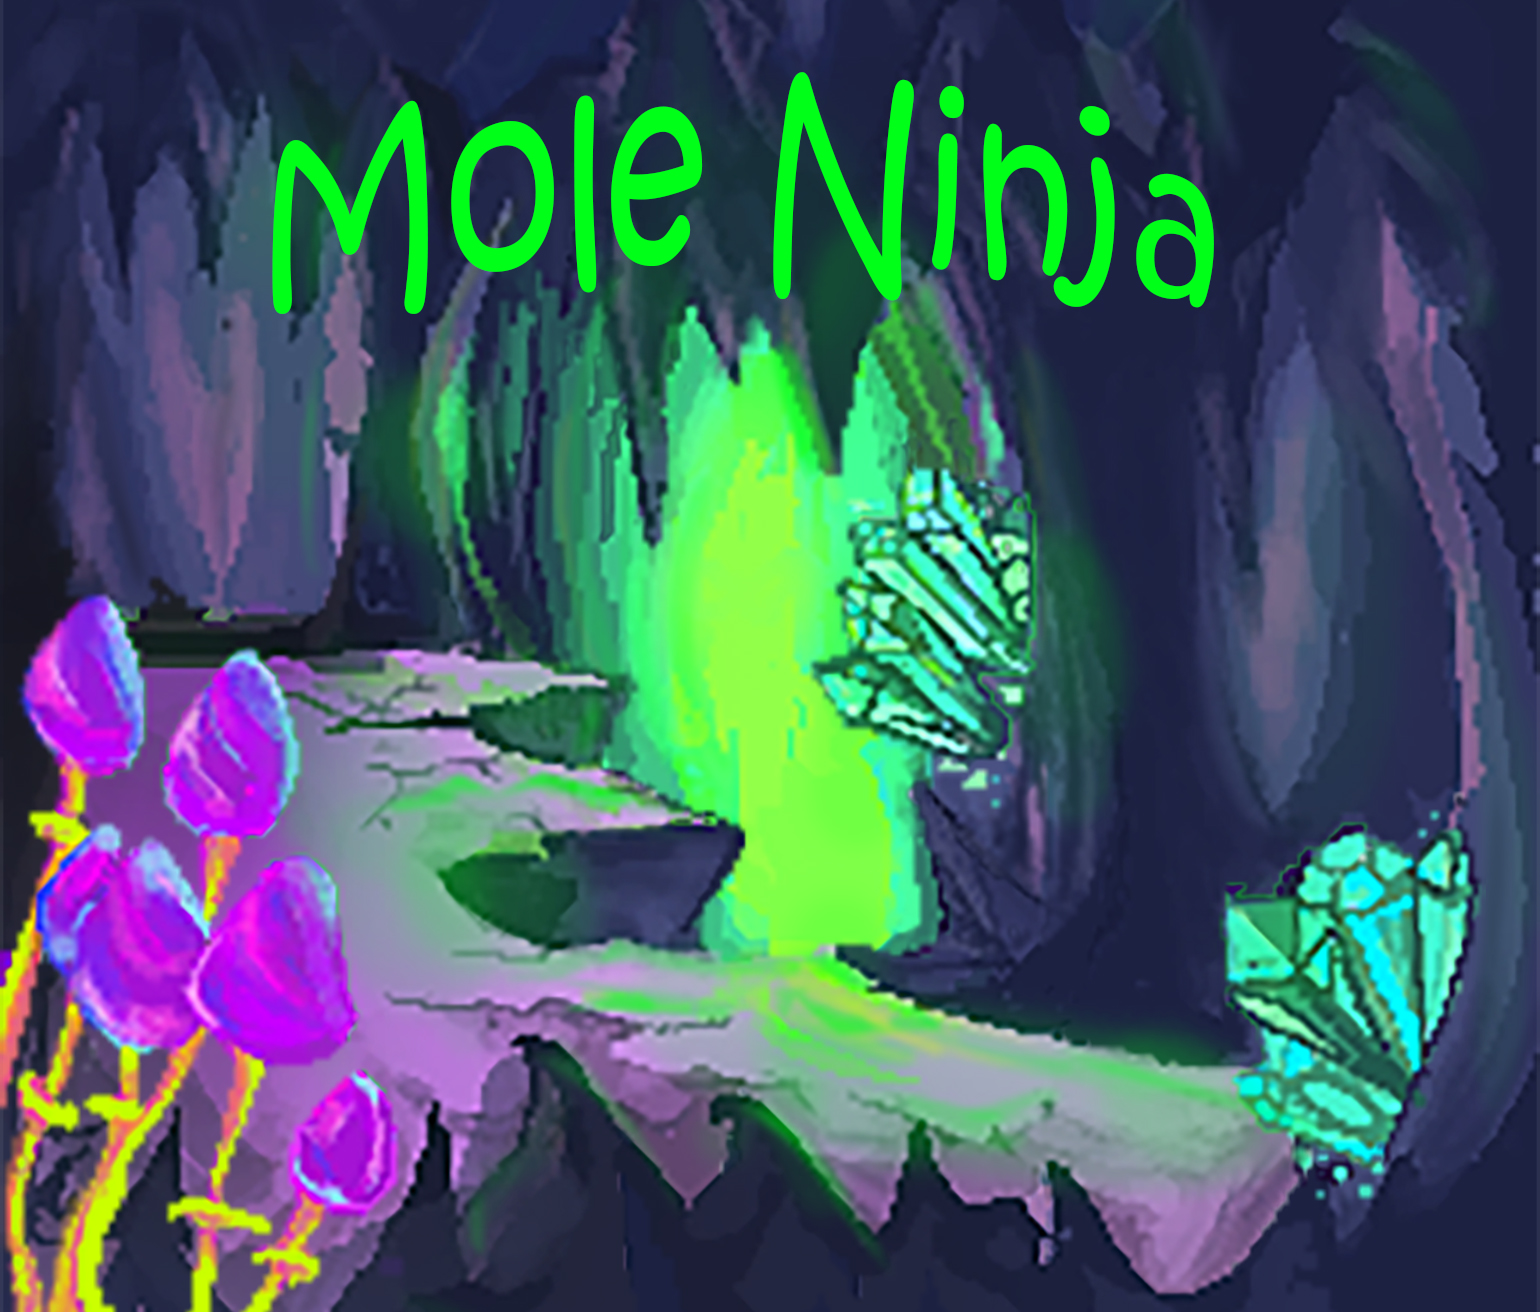 Mole Ninja, 2021